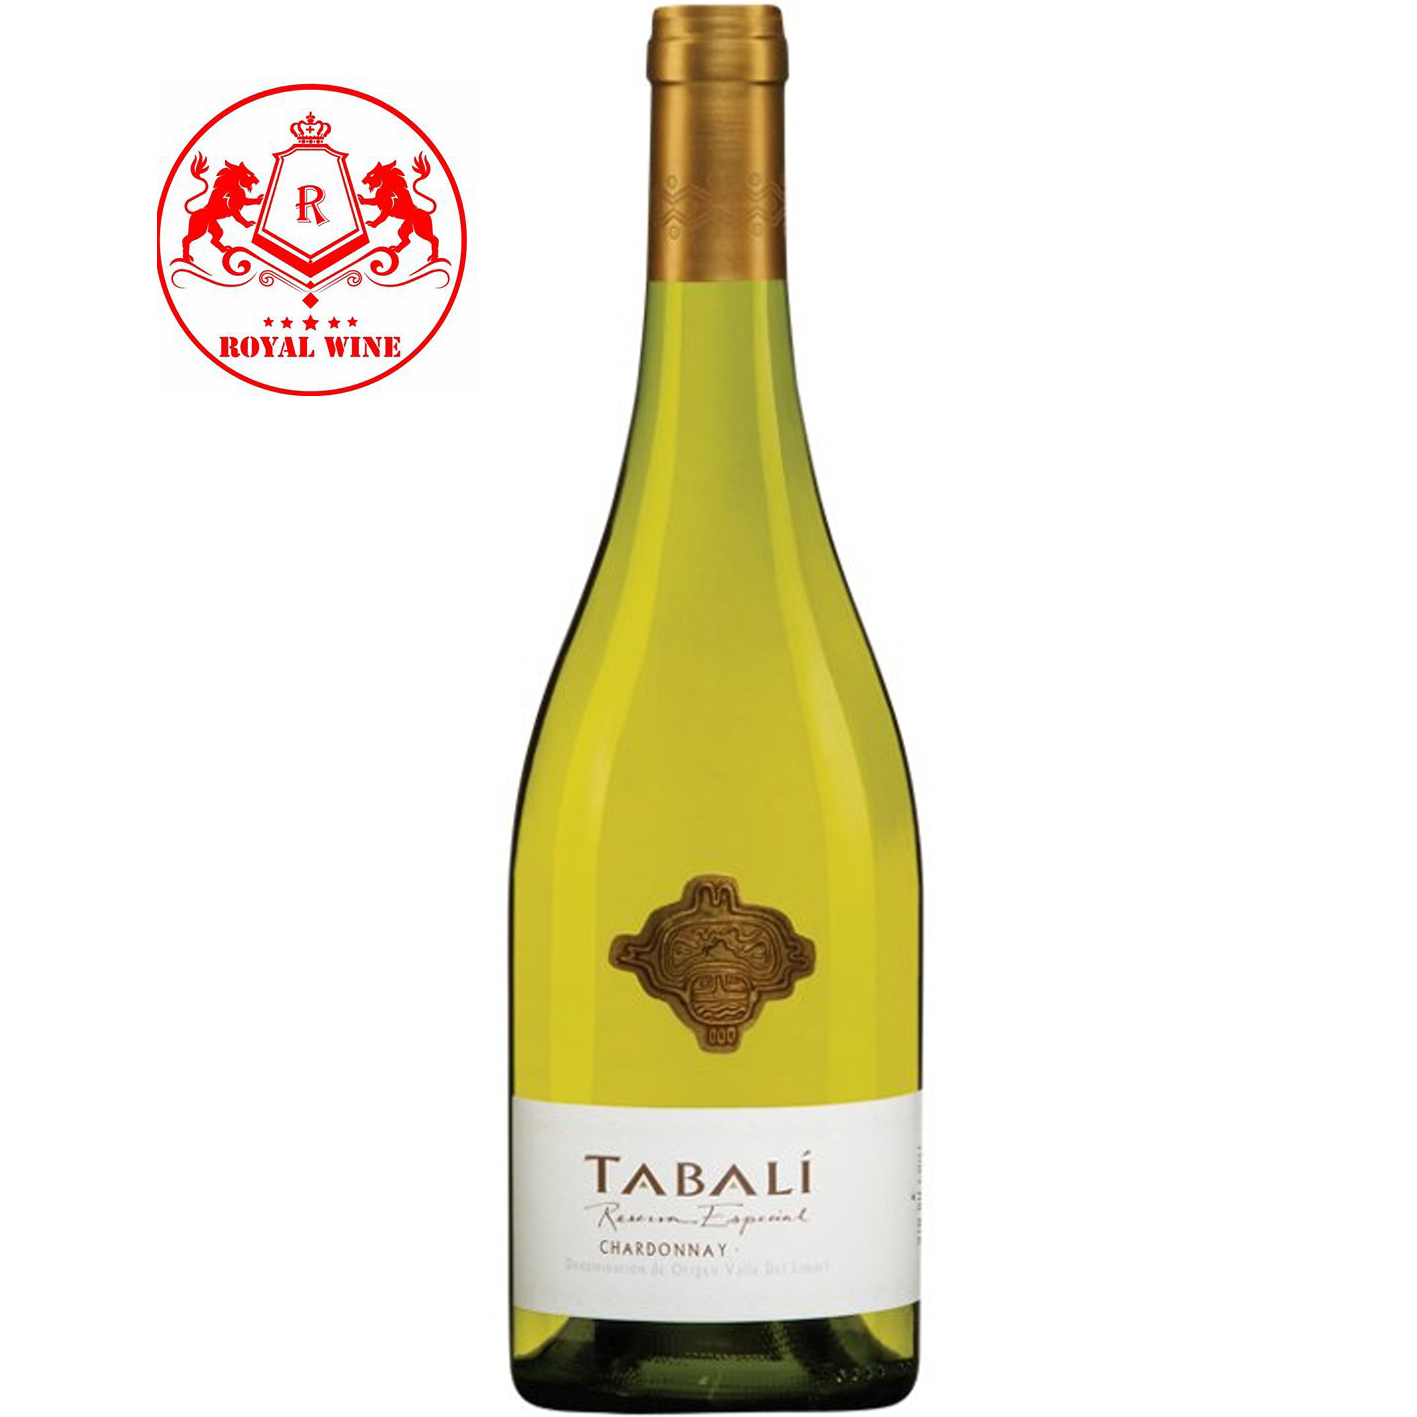 TABALI Reserva Especial Chardonnay